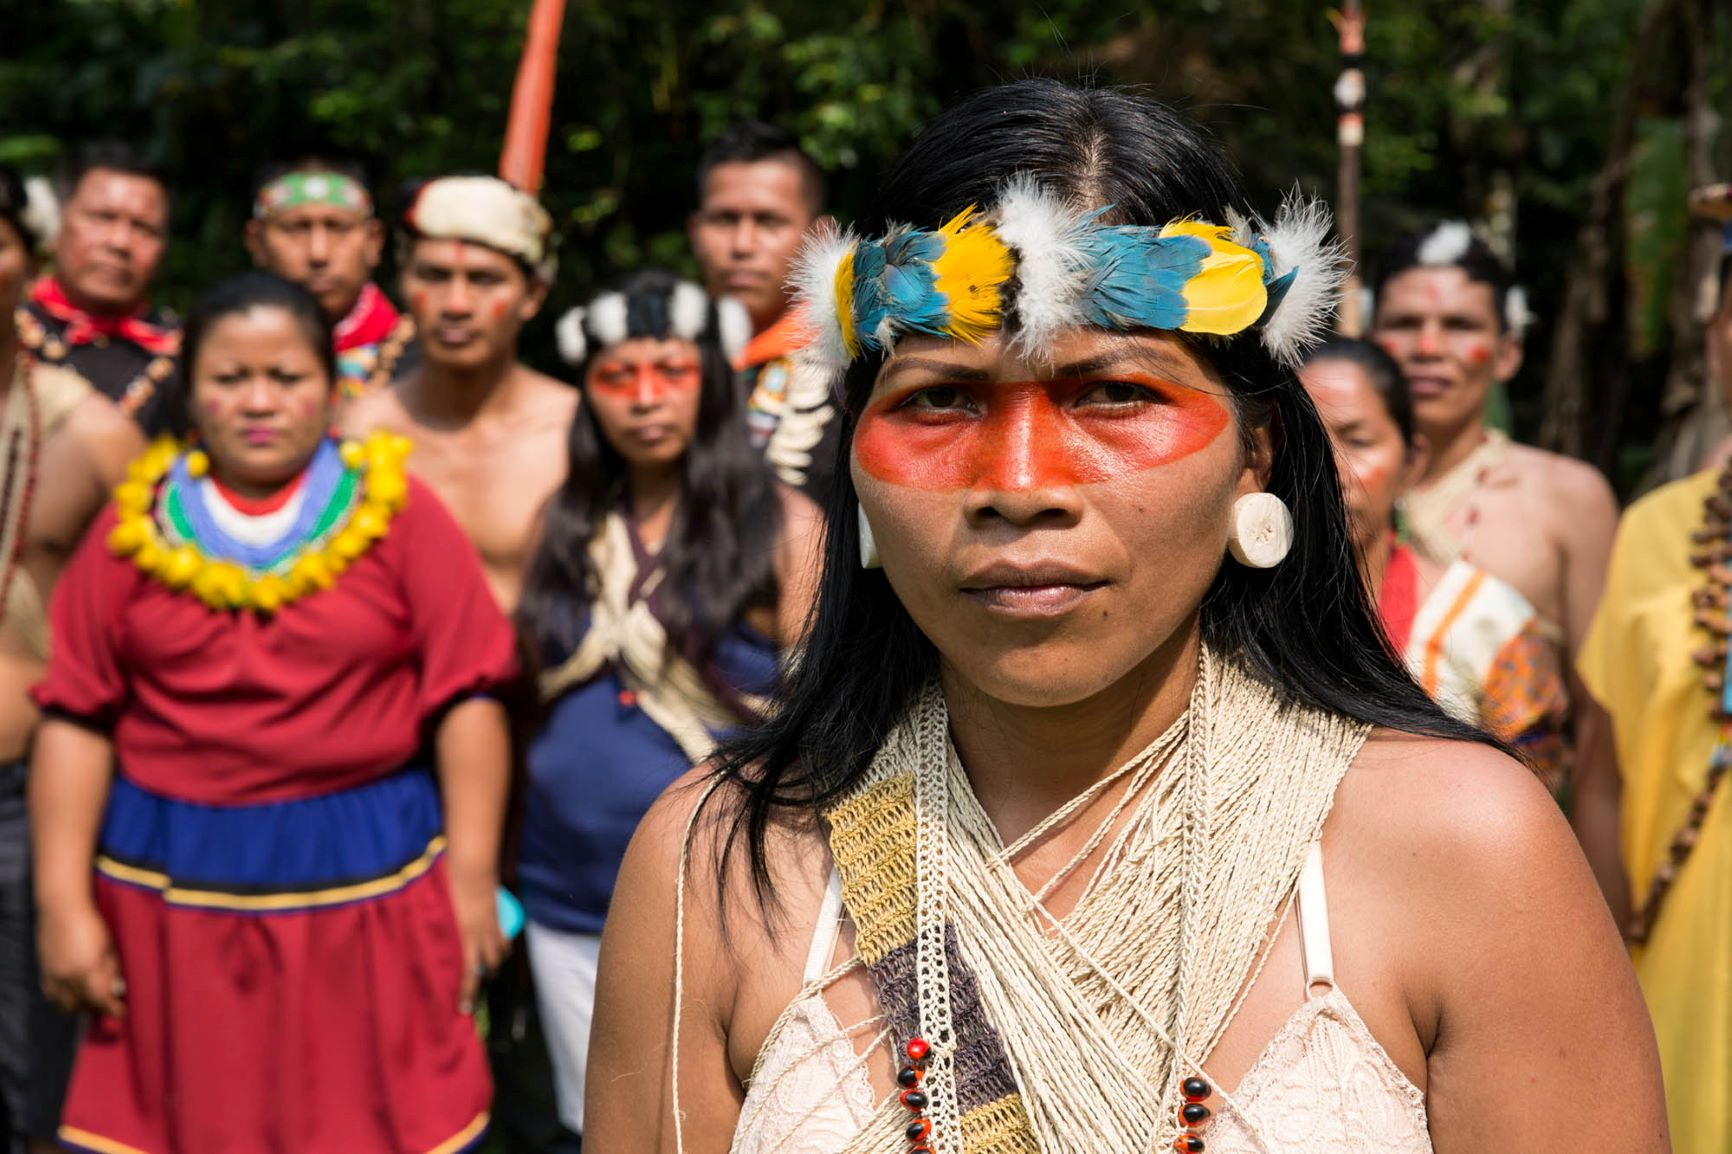 Nemonte Nenquimo, Waorani leader from the Ecuadorian Amazon